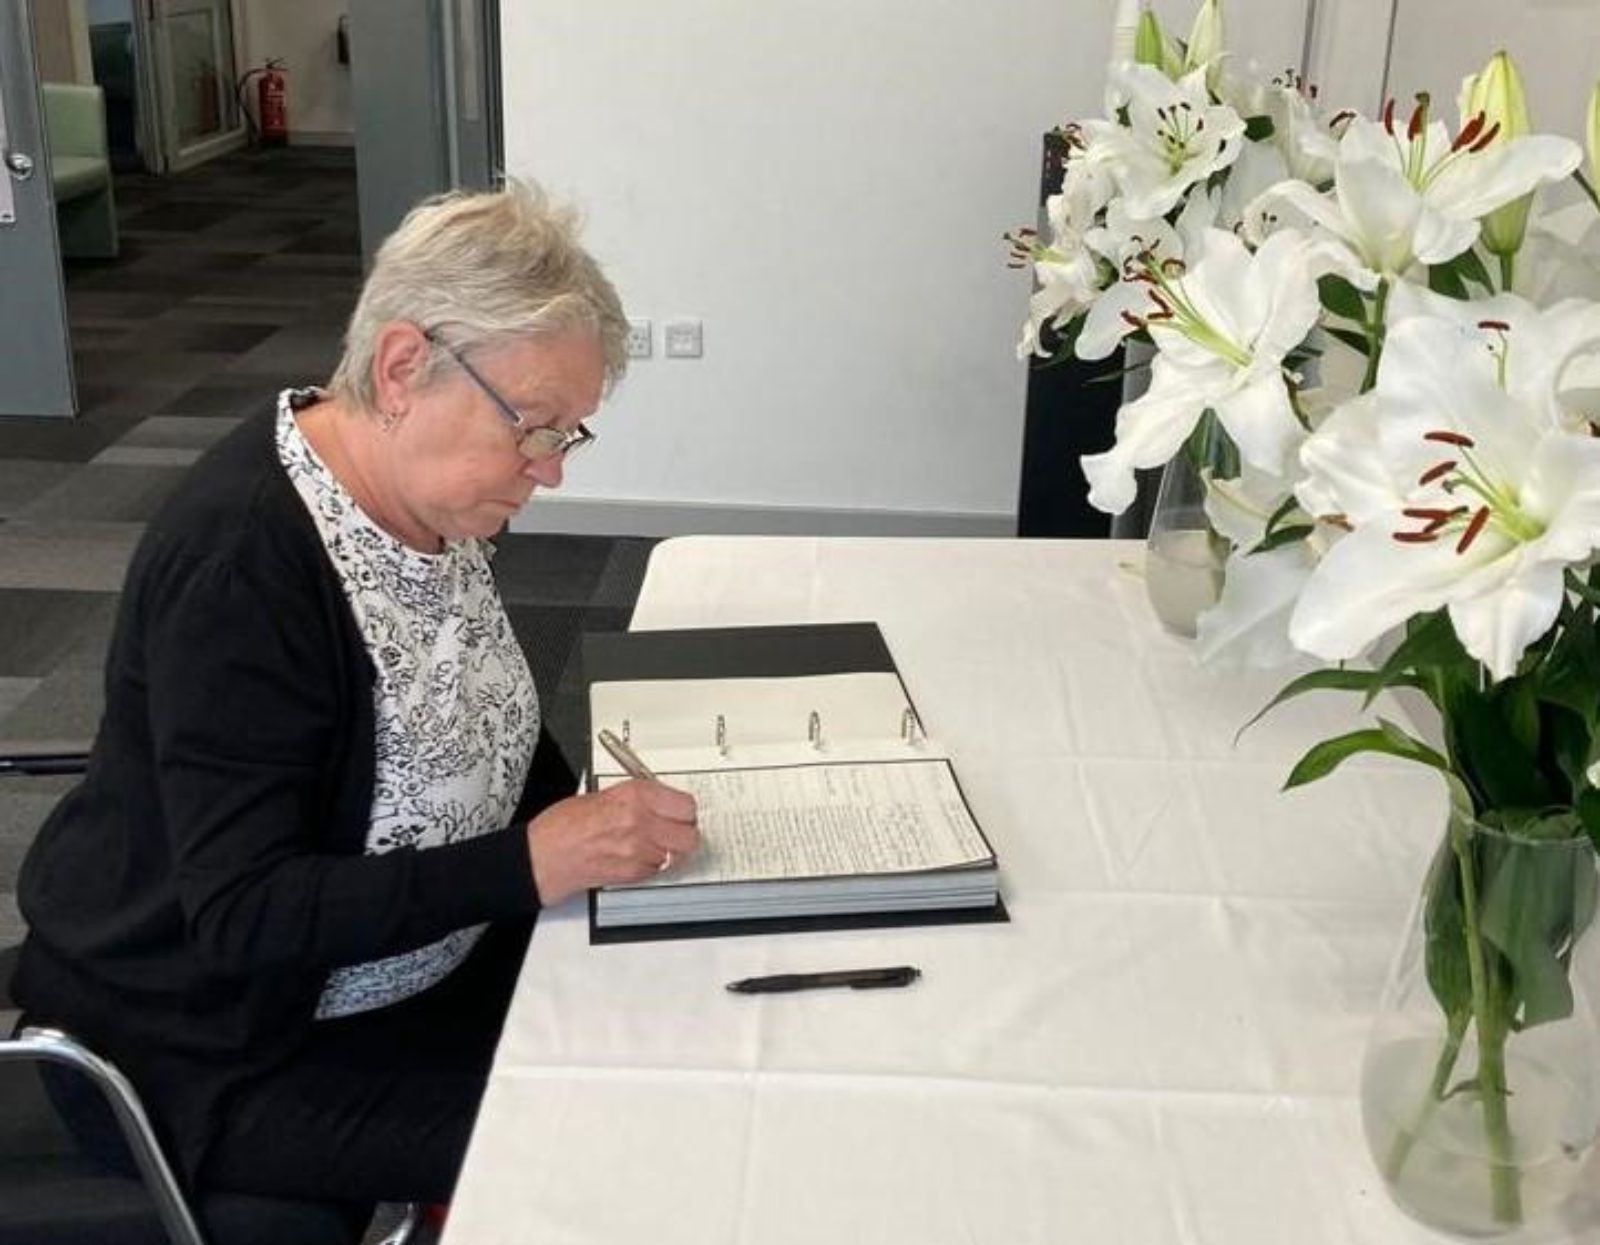 Councillor Sh eila Berry signing the book of condolences in Sutton